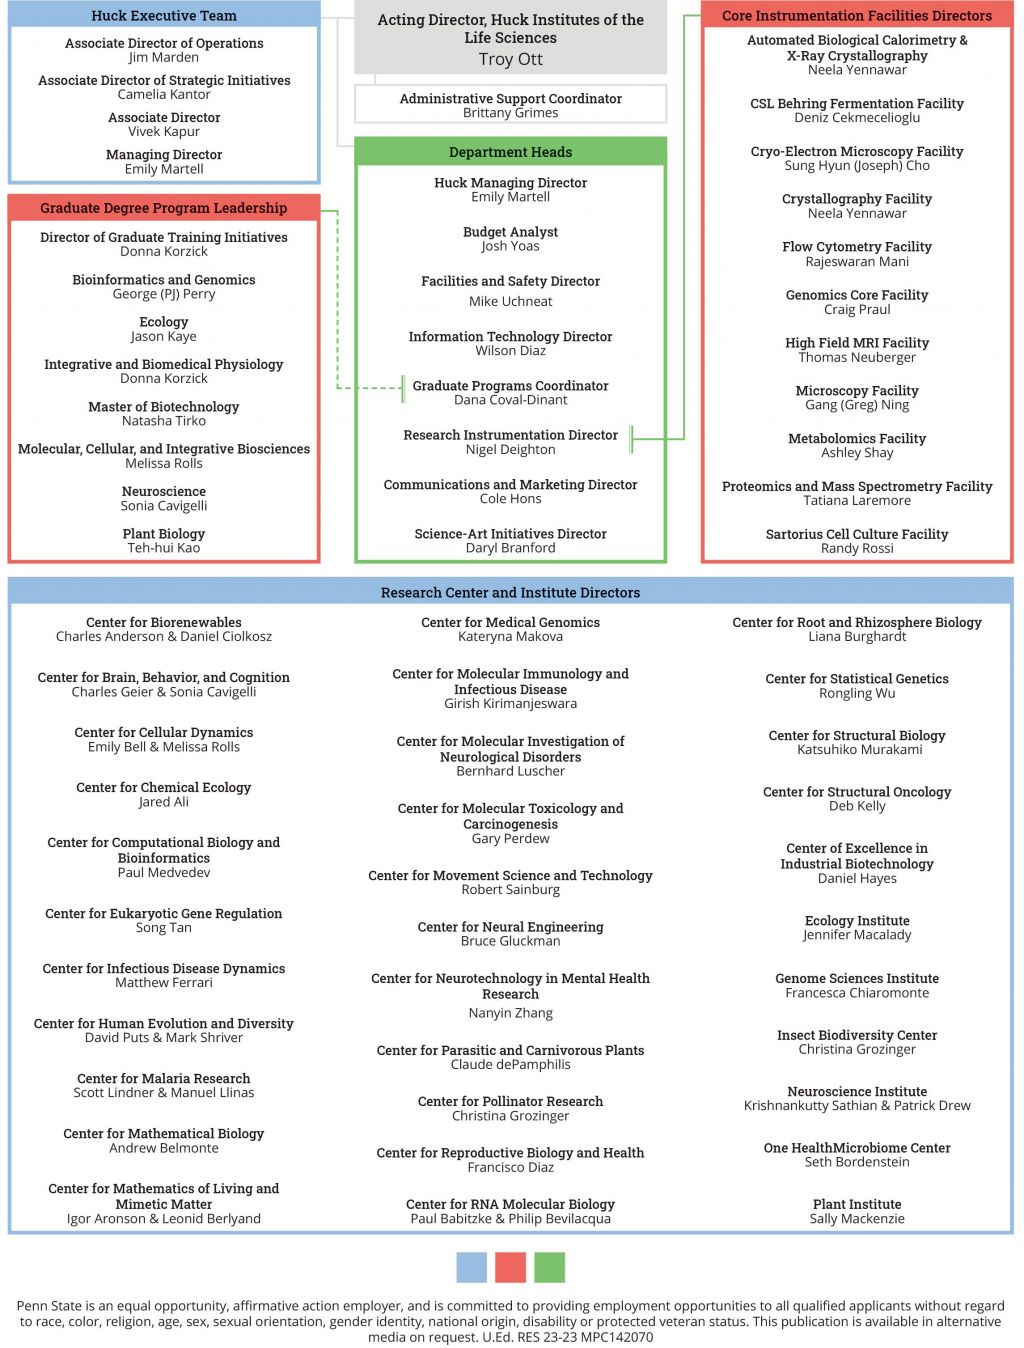 Huck Institutes Leadership Org Chart